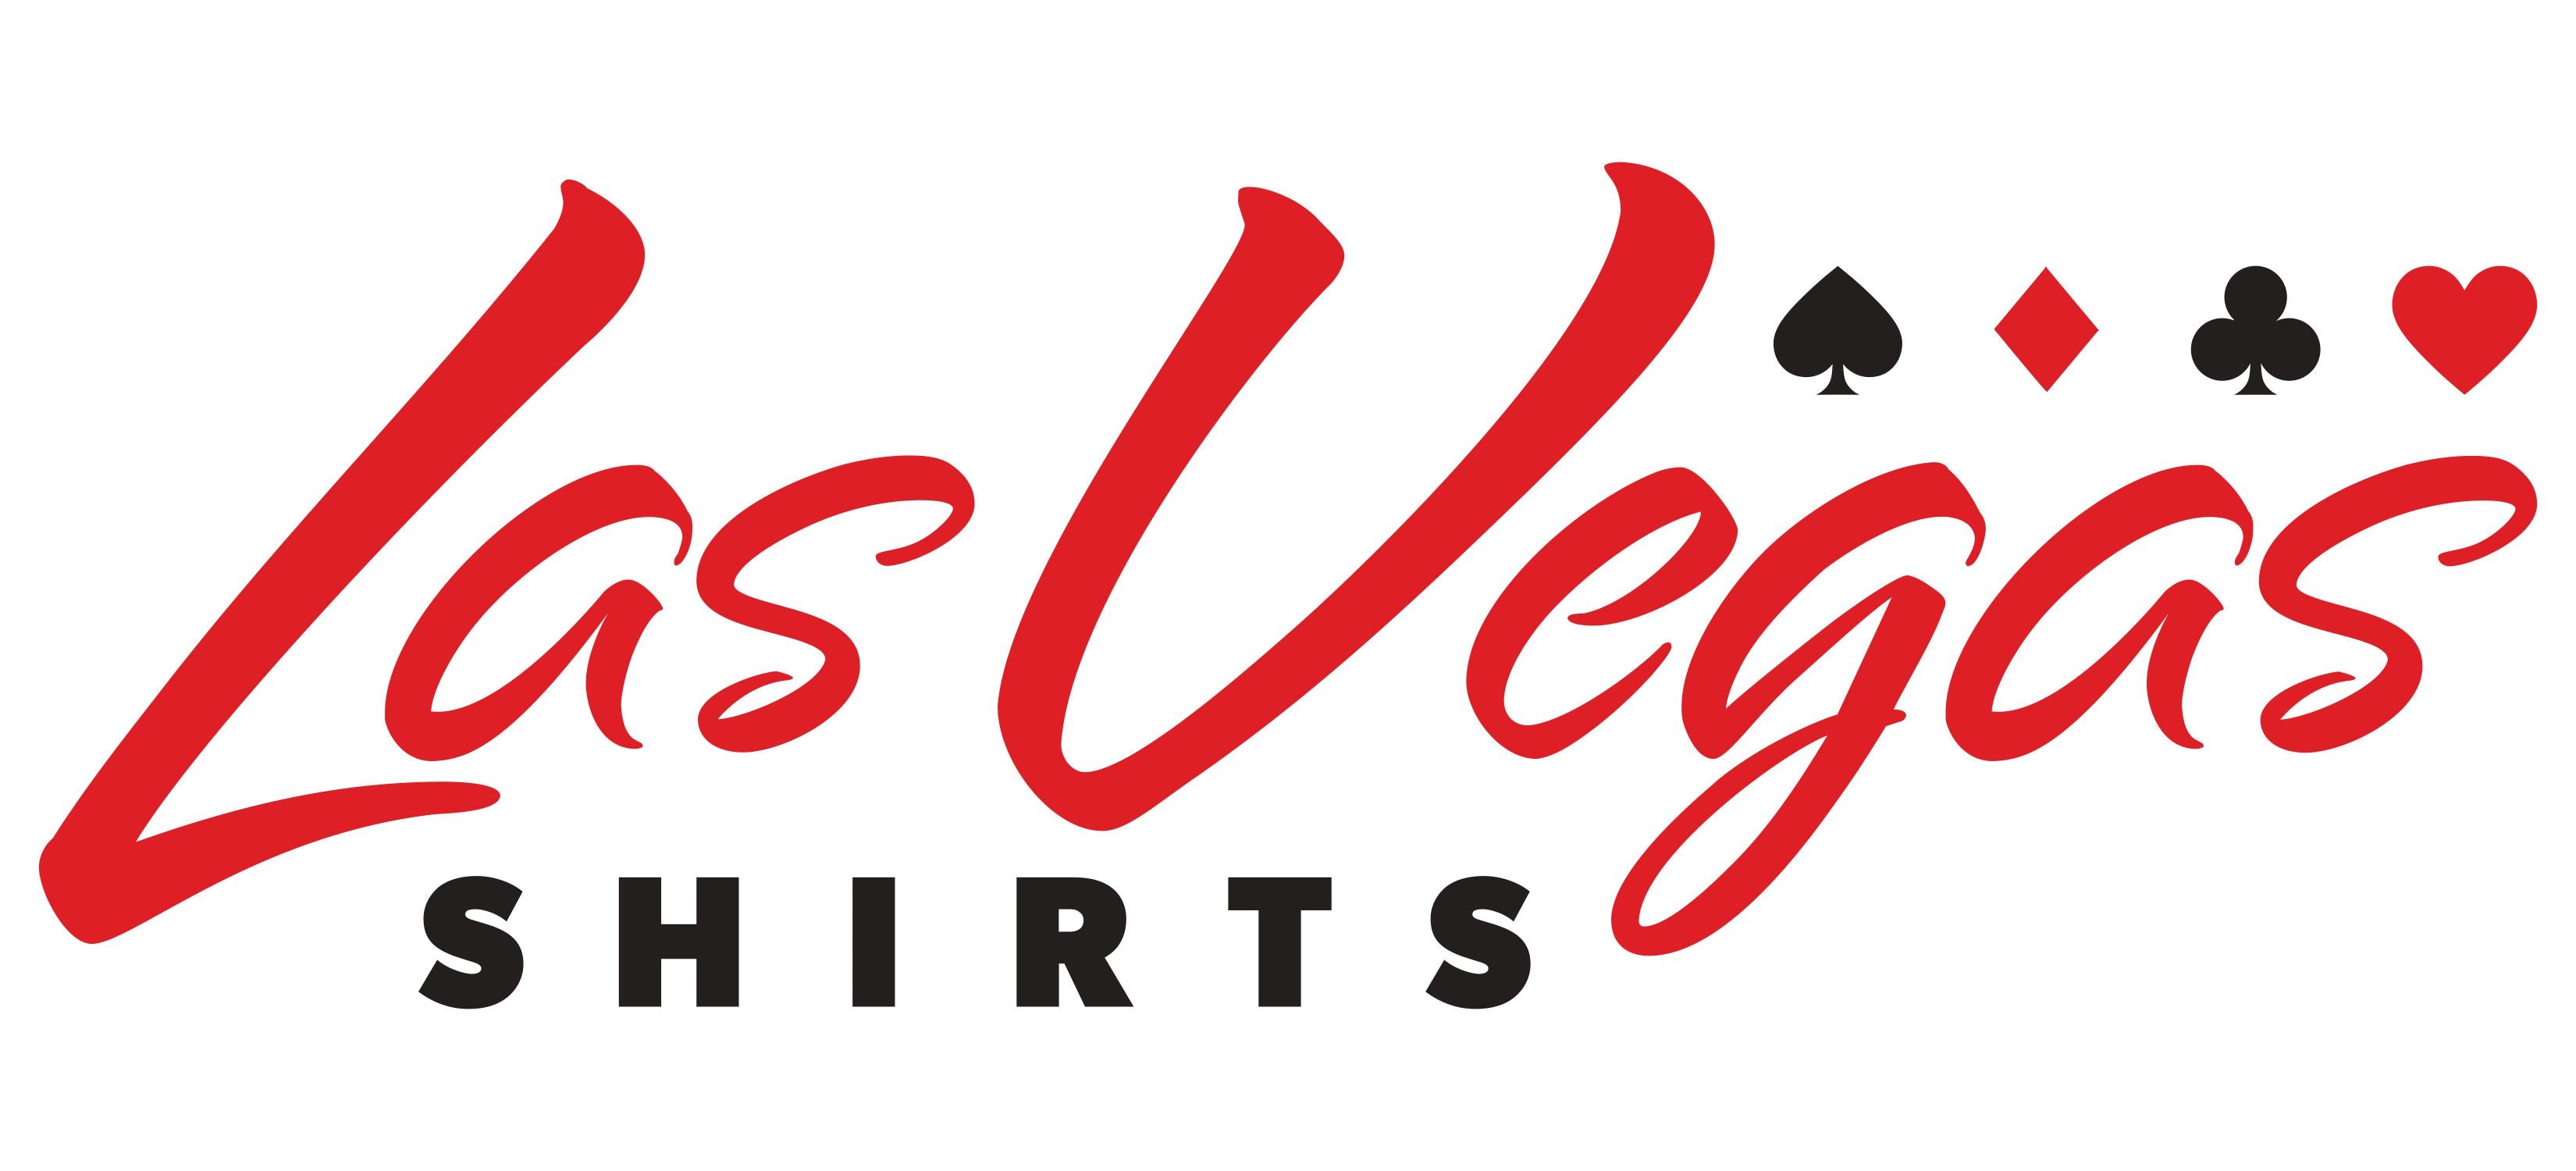 Las Vegas Shirts